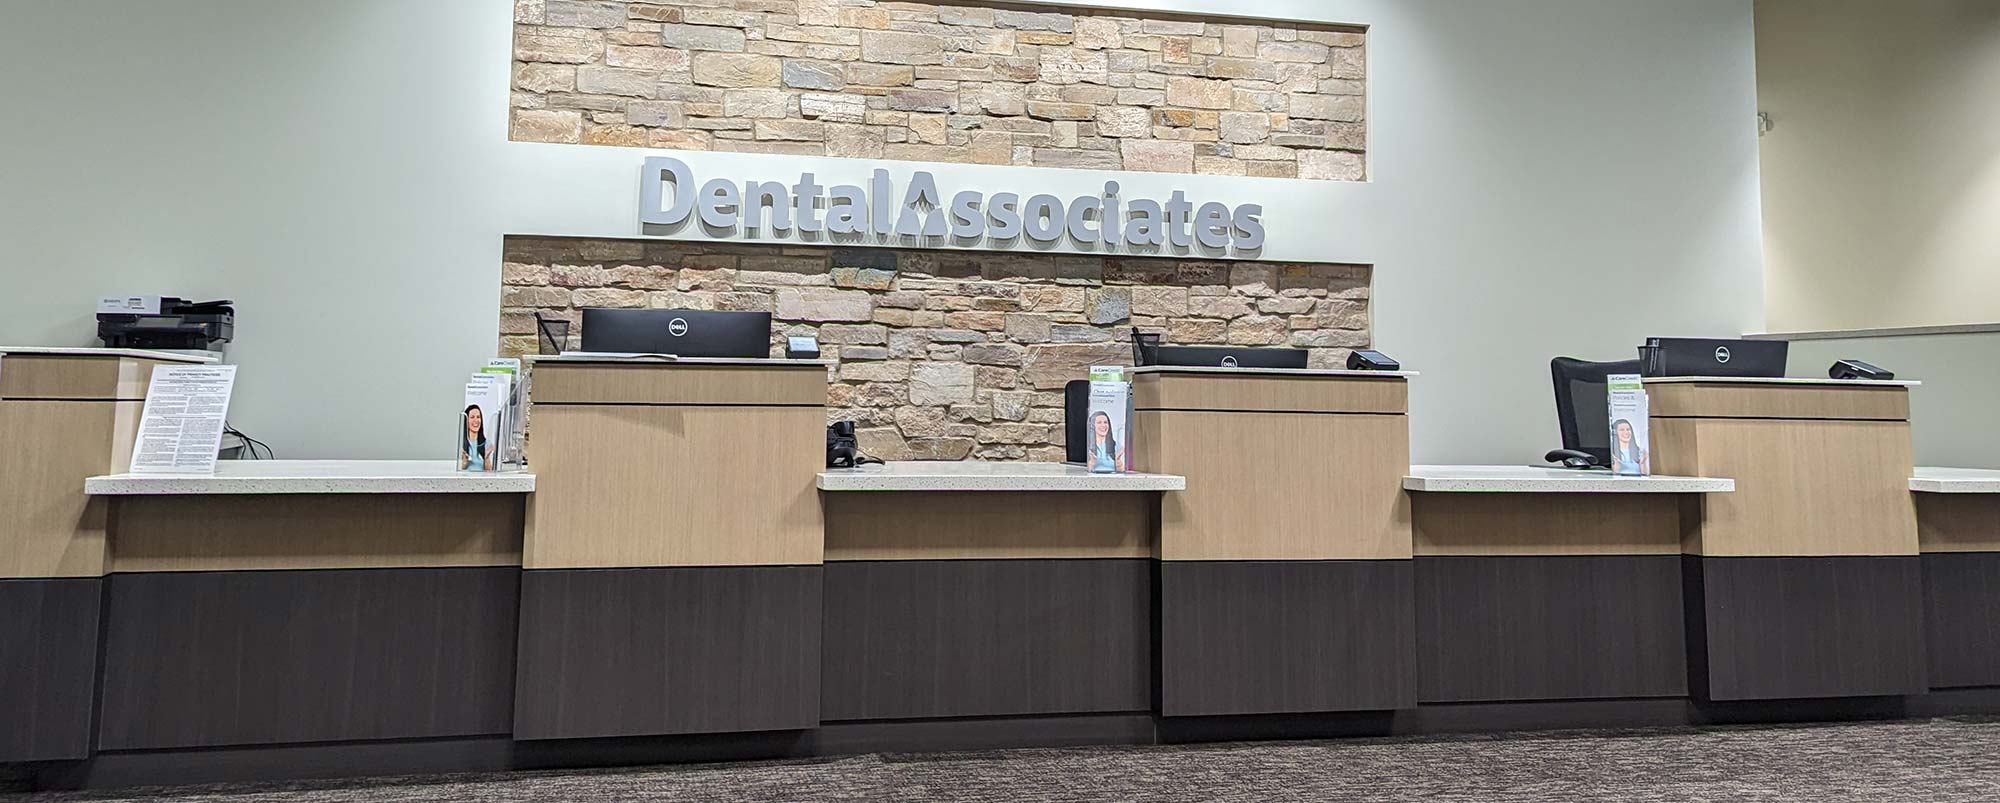 Dental Associates Glendale at Bayshore Mall reception area.